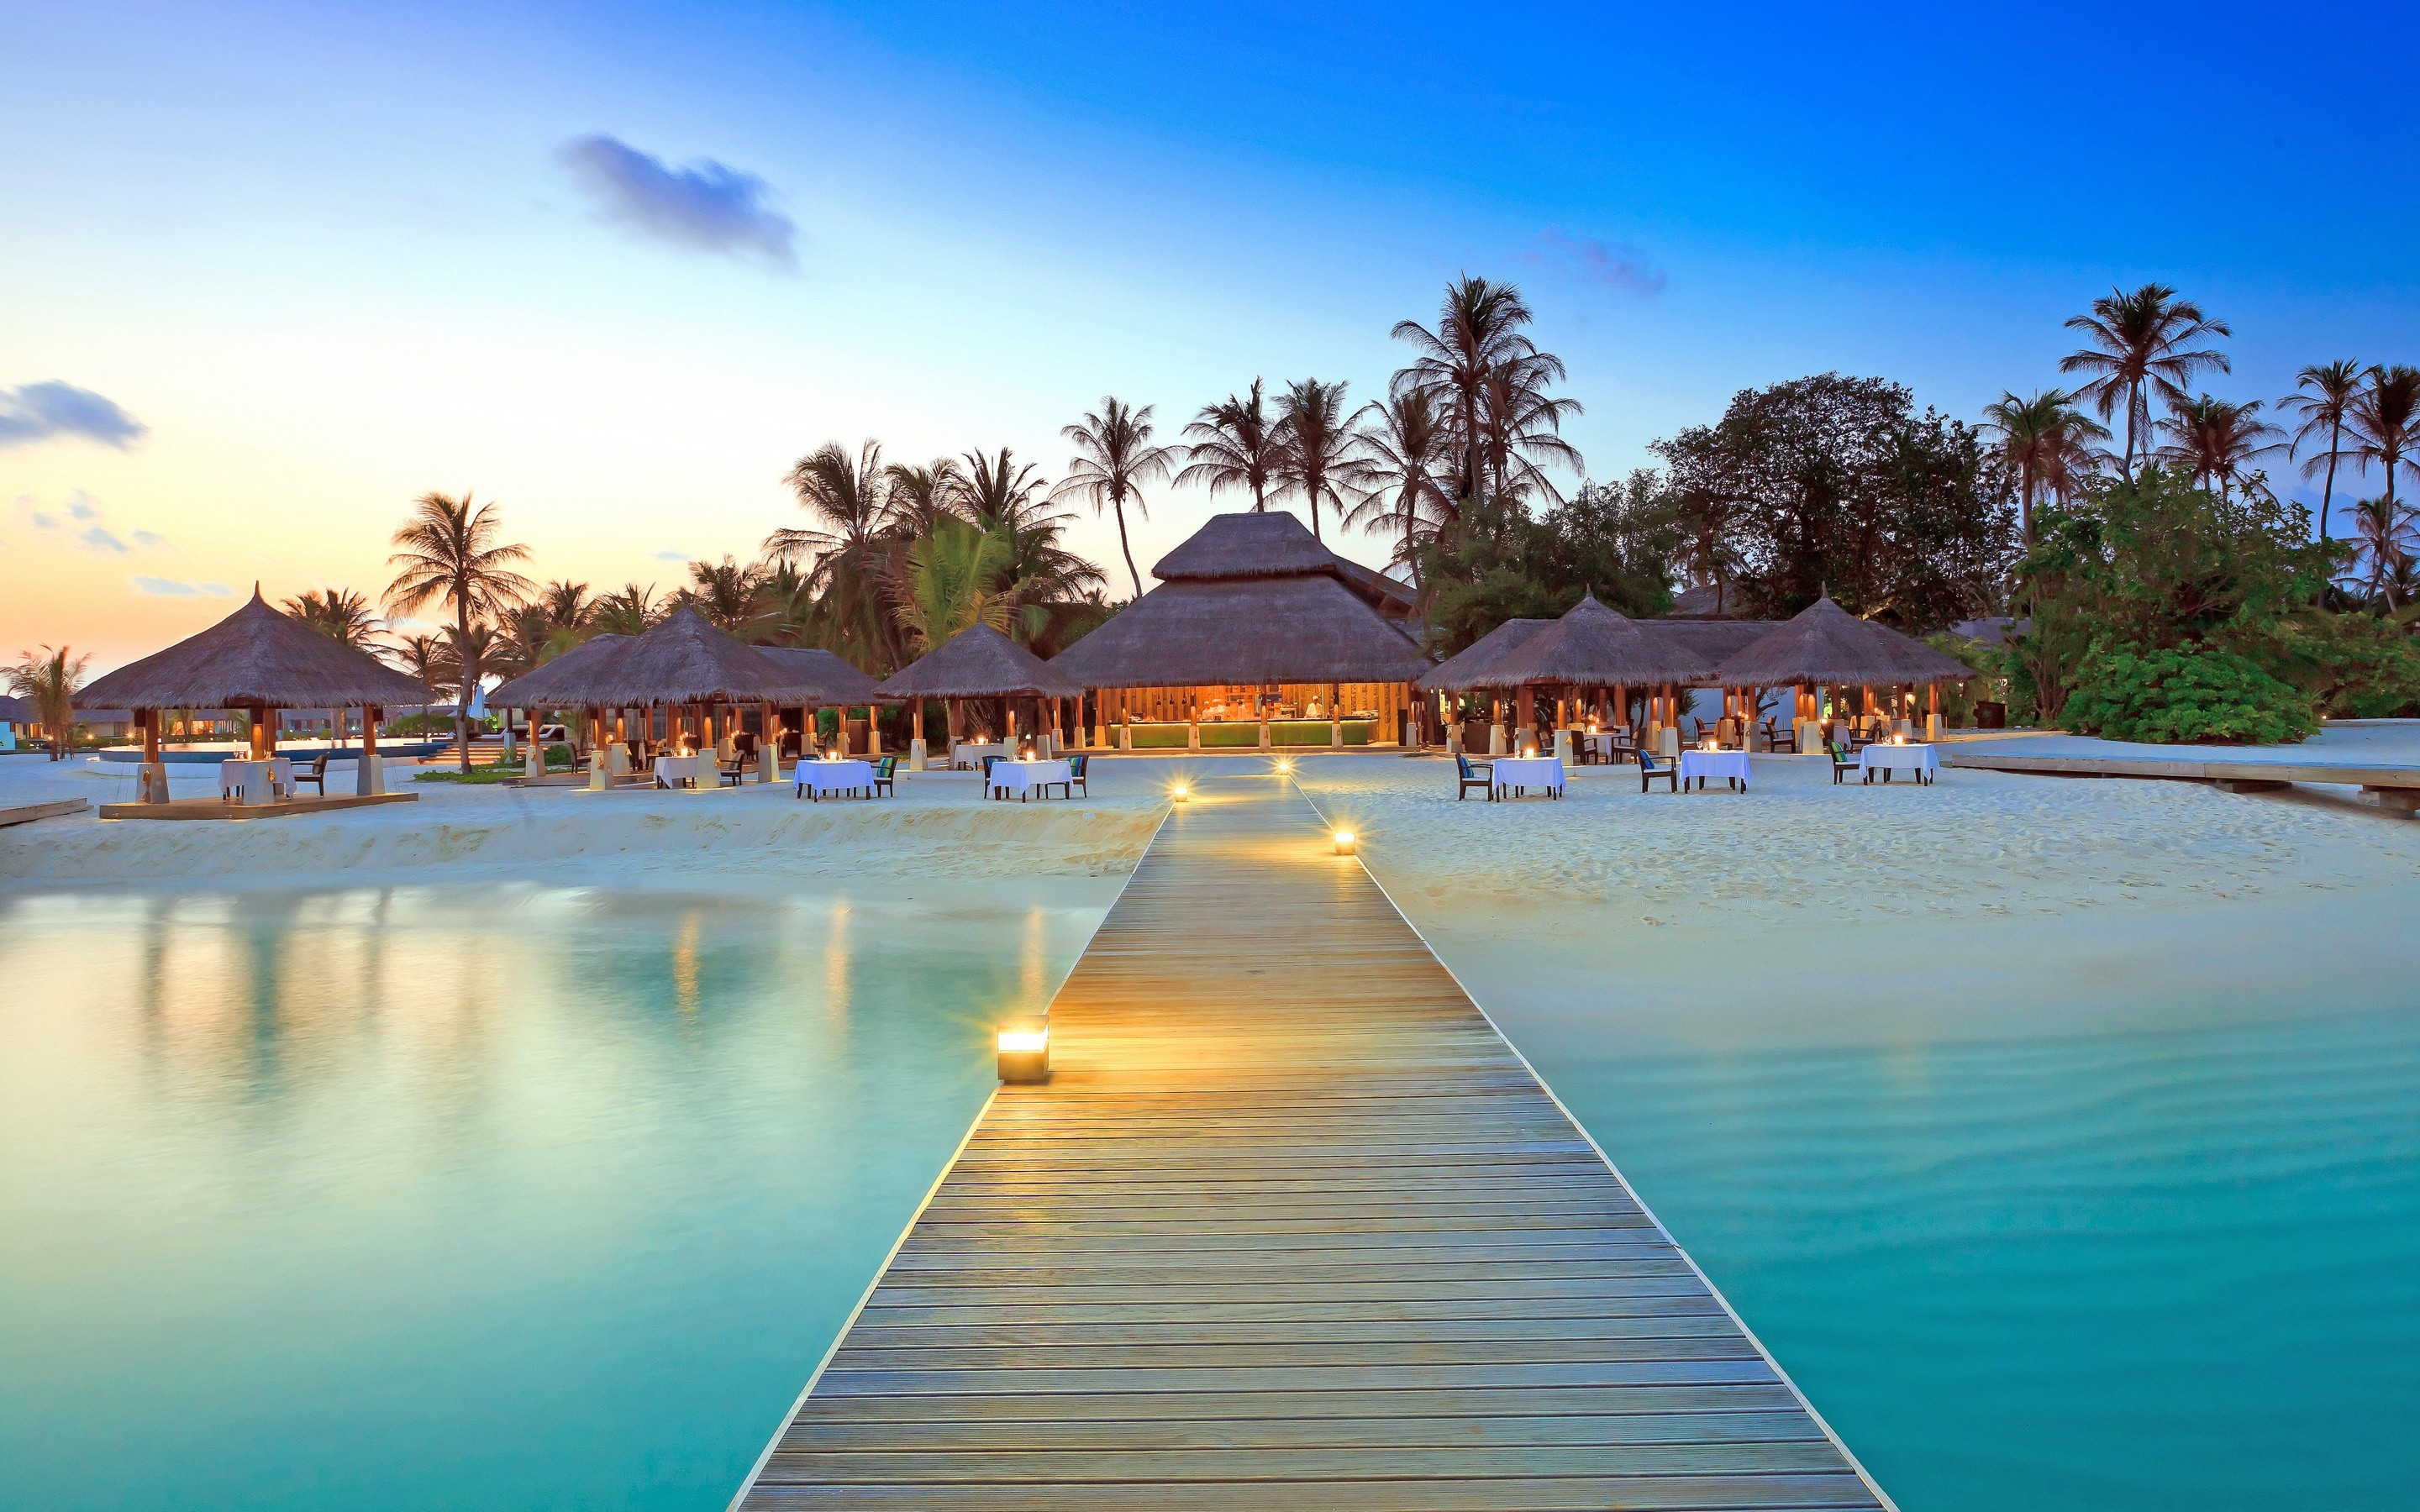 General 2880x1800 dock island beach palm trees hotel Maldives restaurant resort pier sky sunlight tropical jetty lights clouds table chair sand